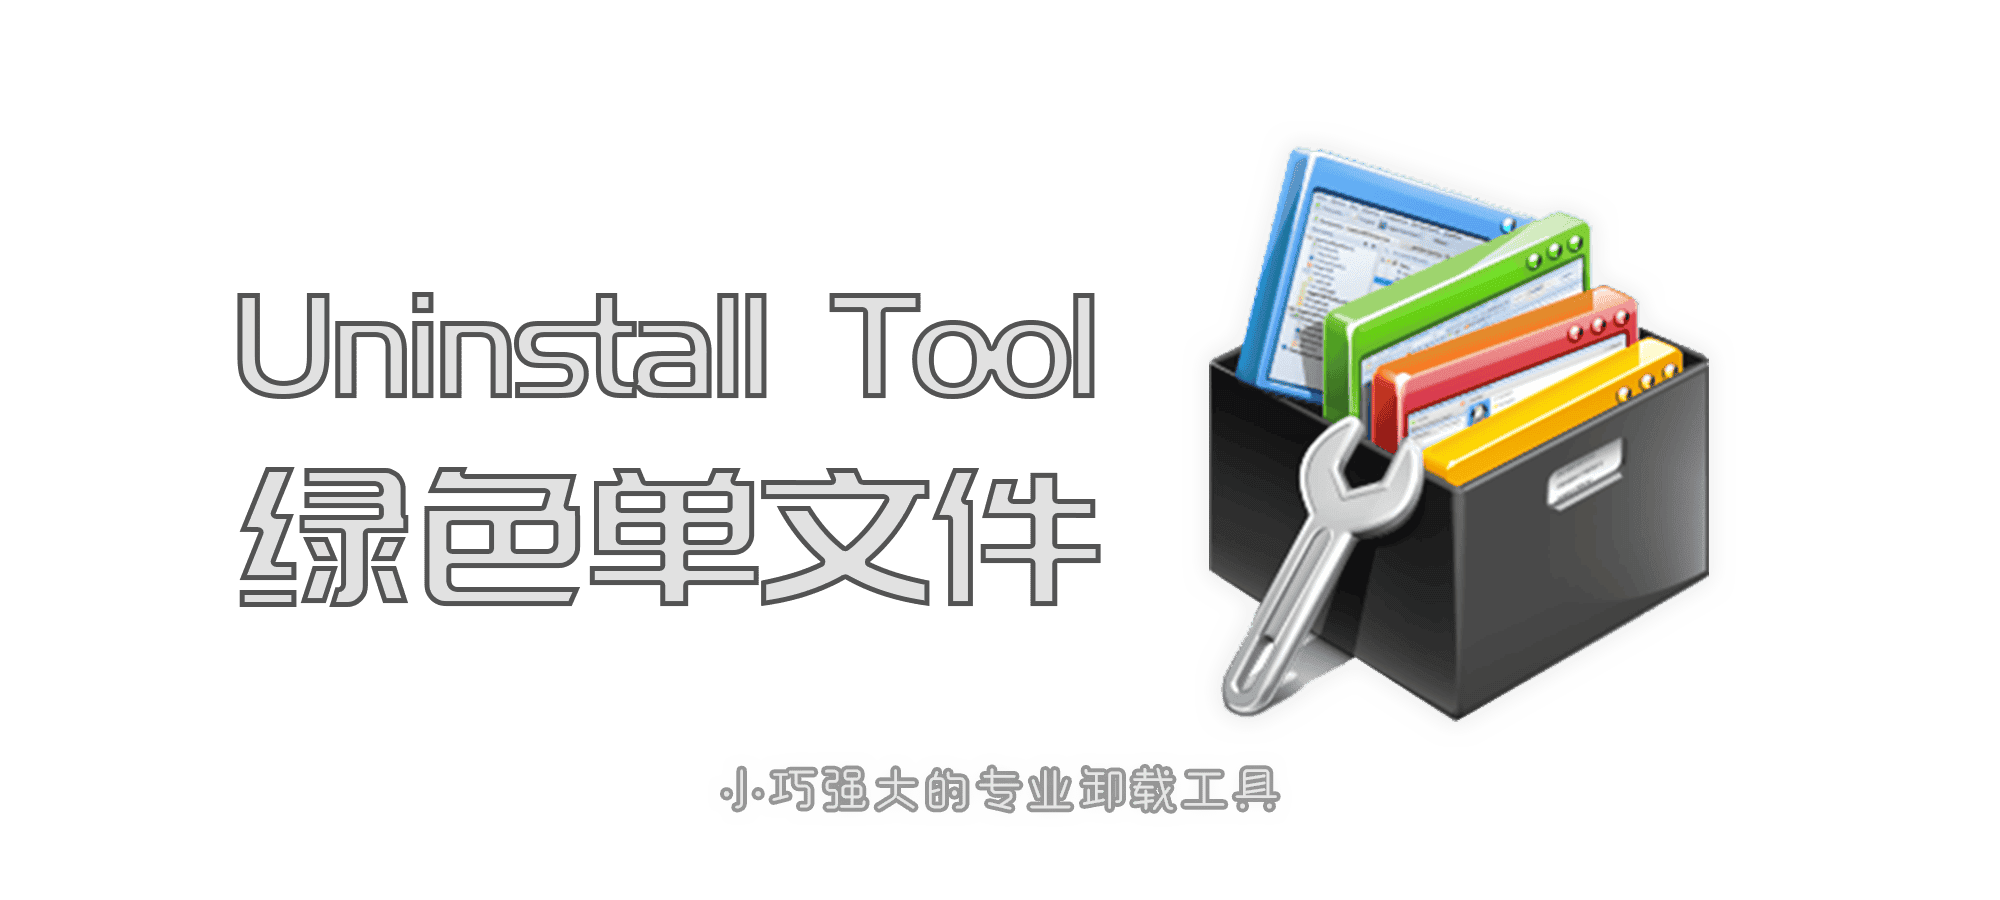 Uninstall Tool 绿色单文件[2022-07-17 更新]-JACK小桔子的小屋